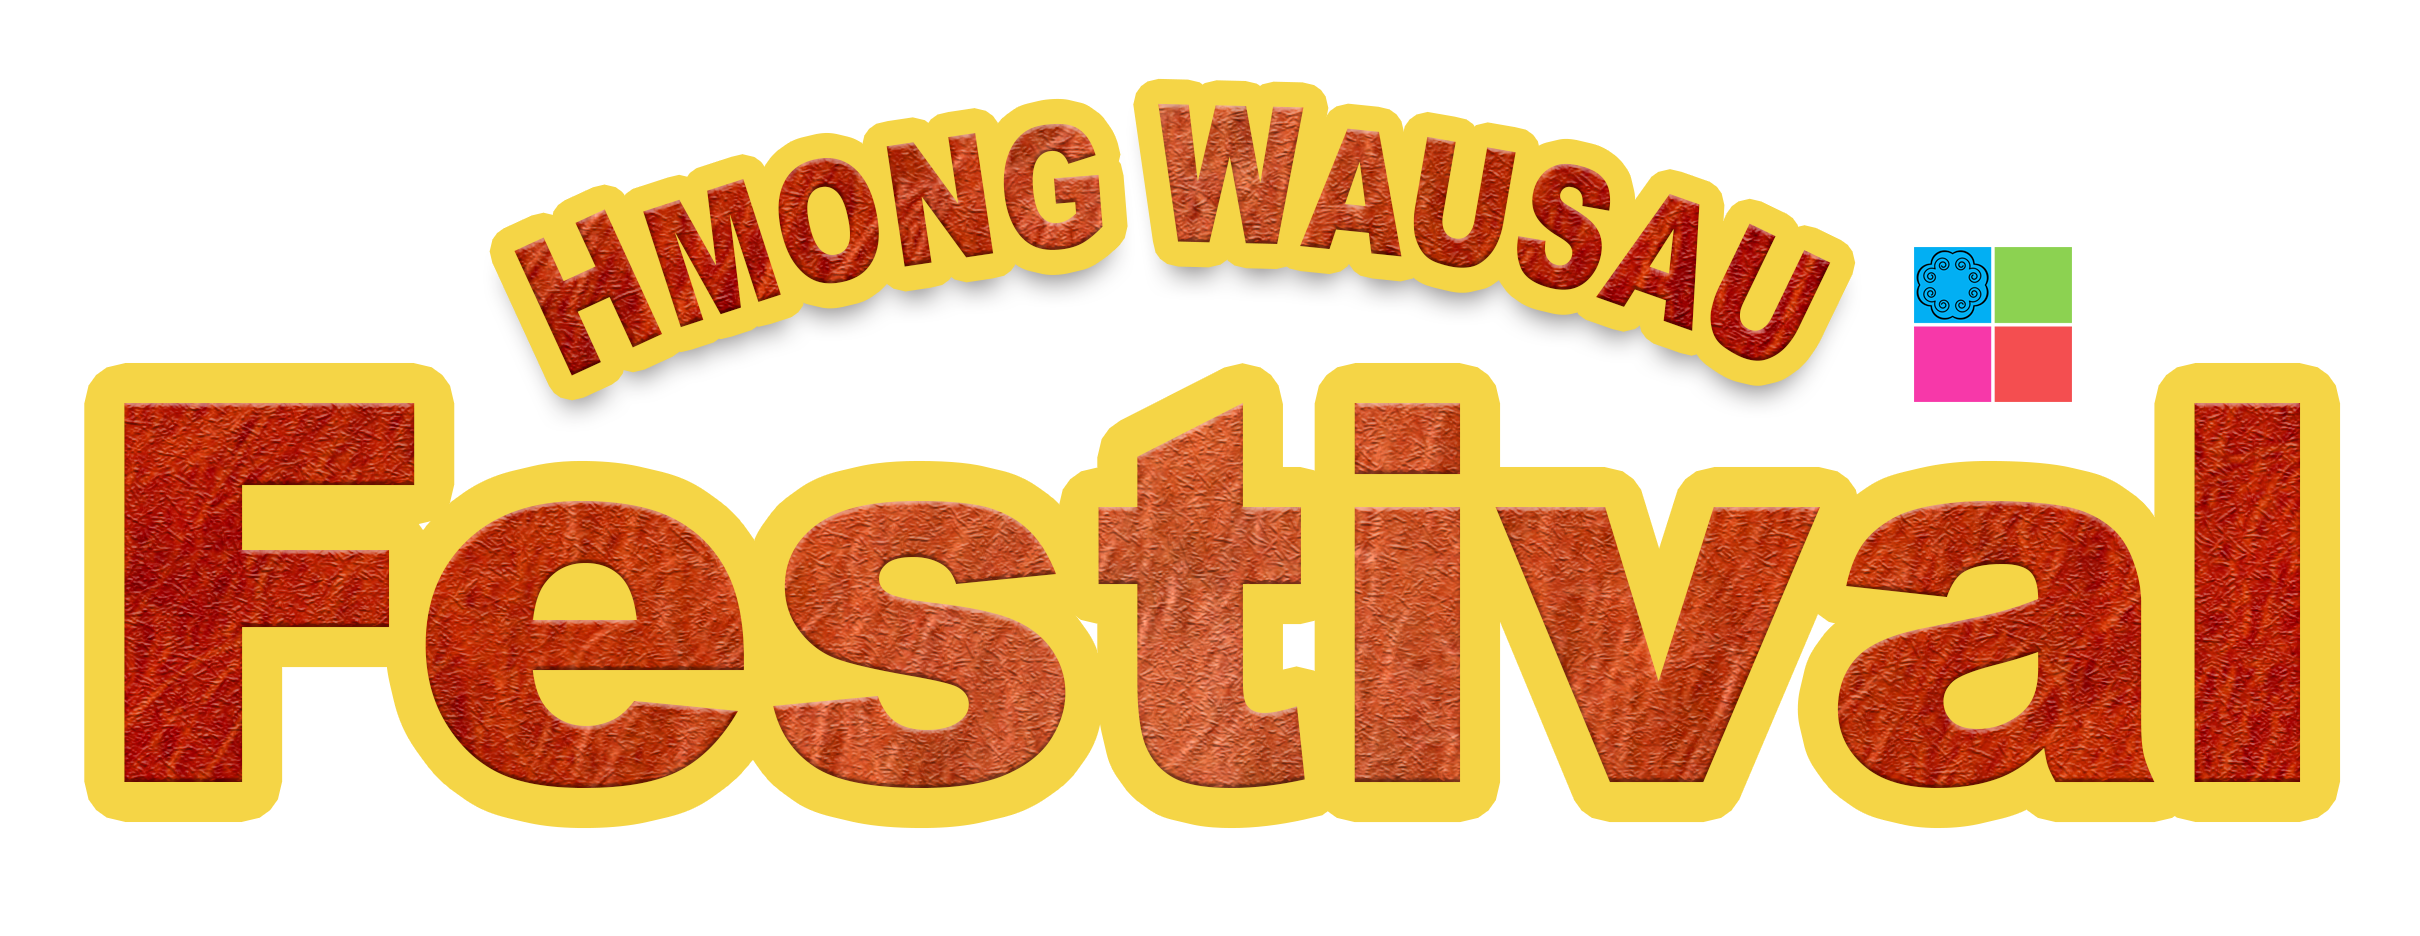 Hmong Wausau Festival